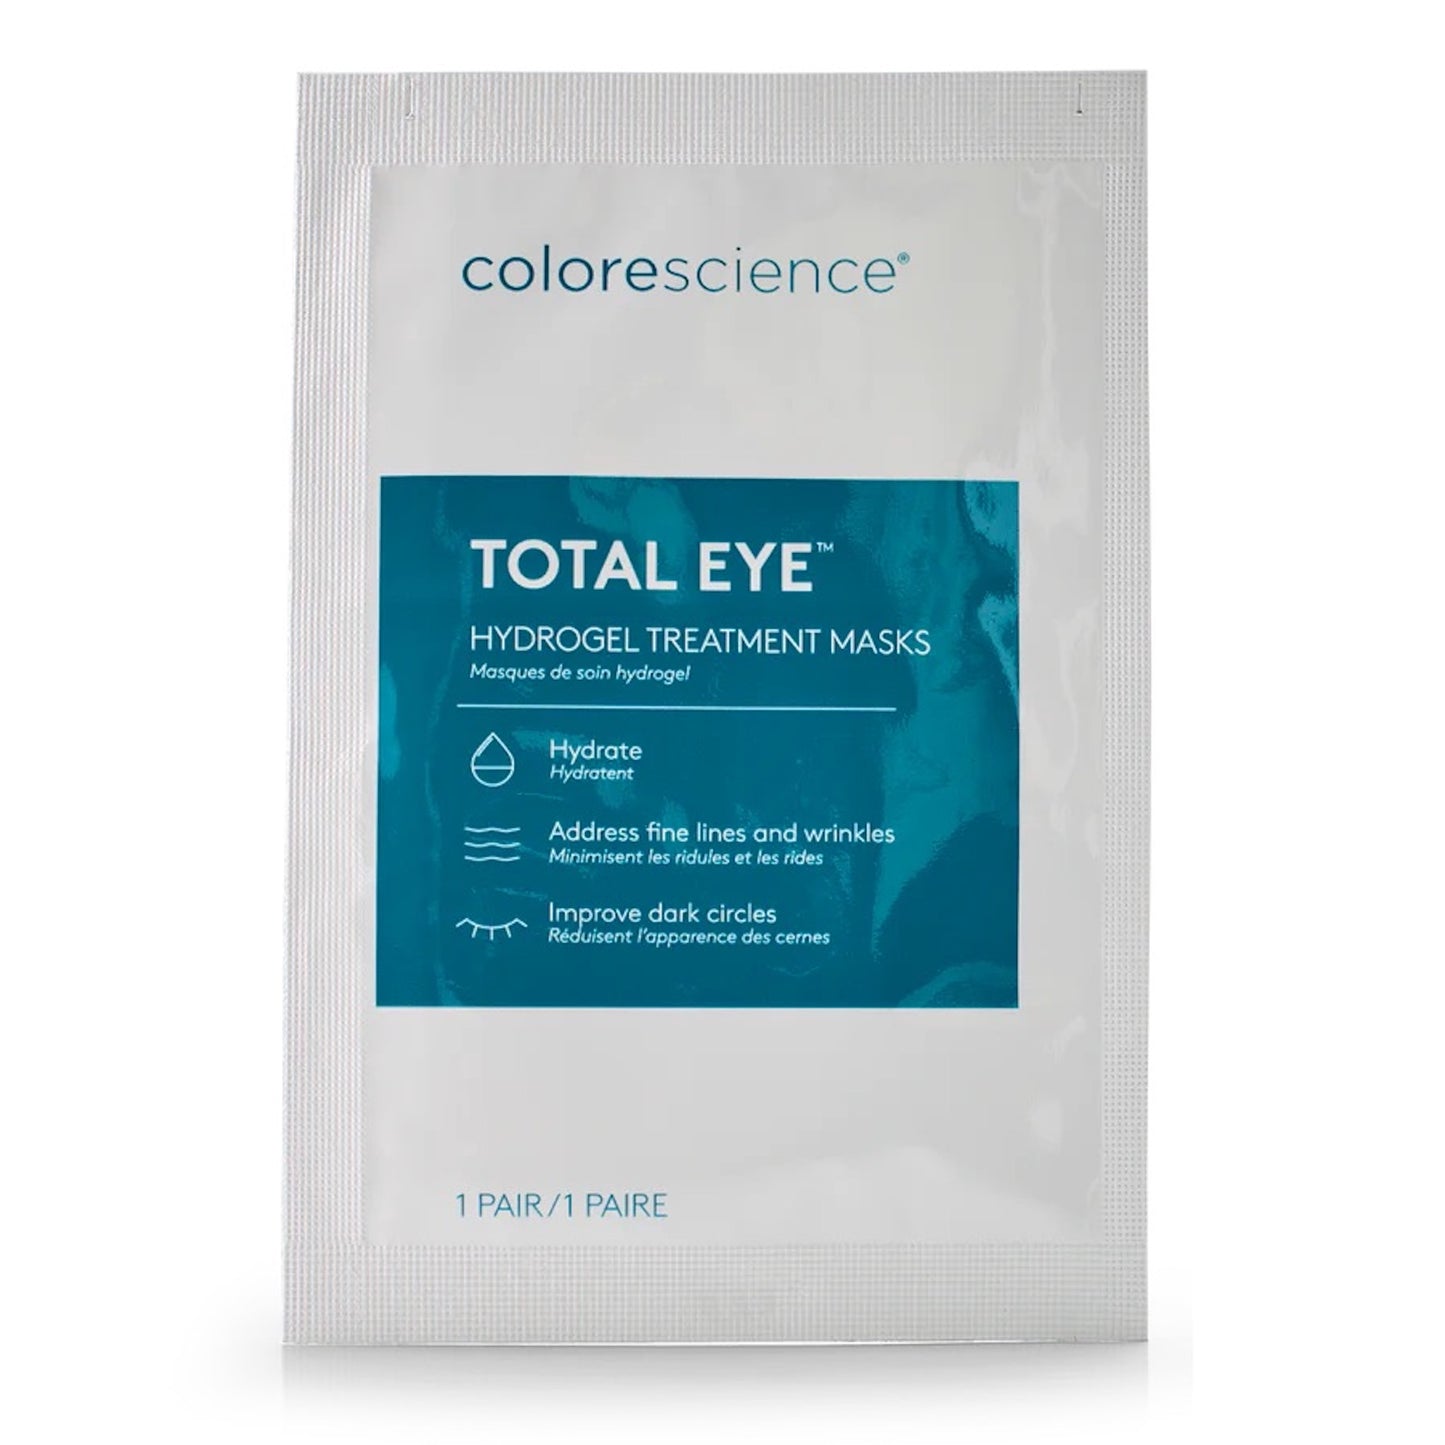 Colorescience Total Eye Hydrogel Treatment Masks